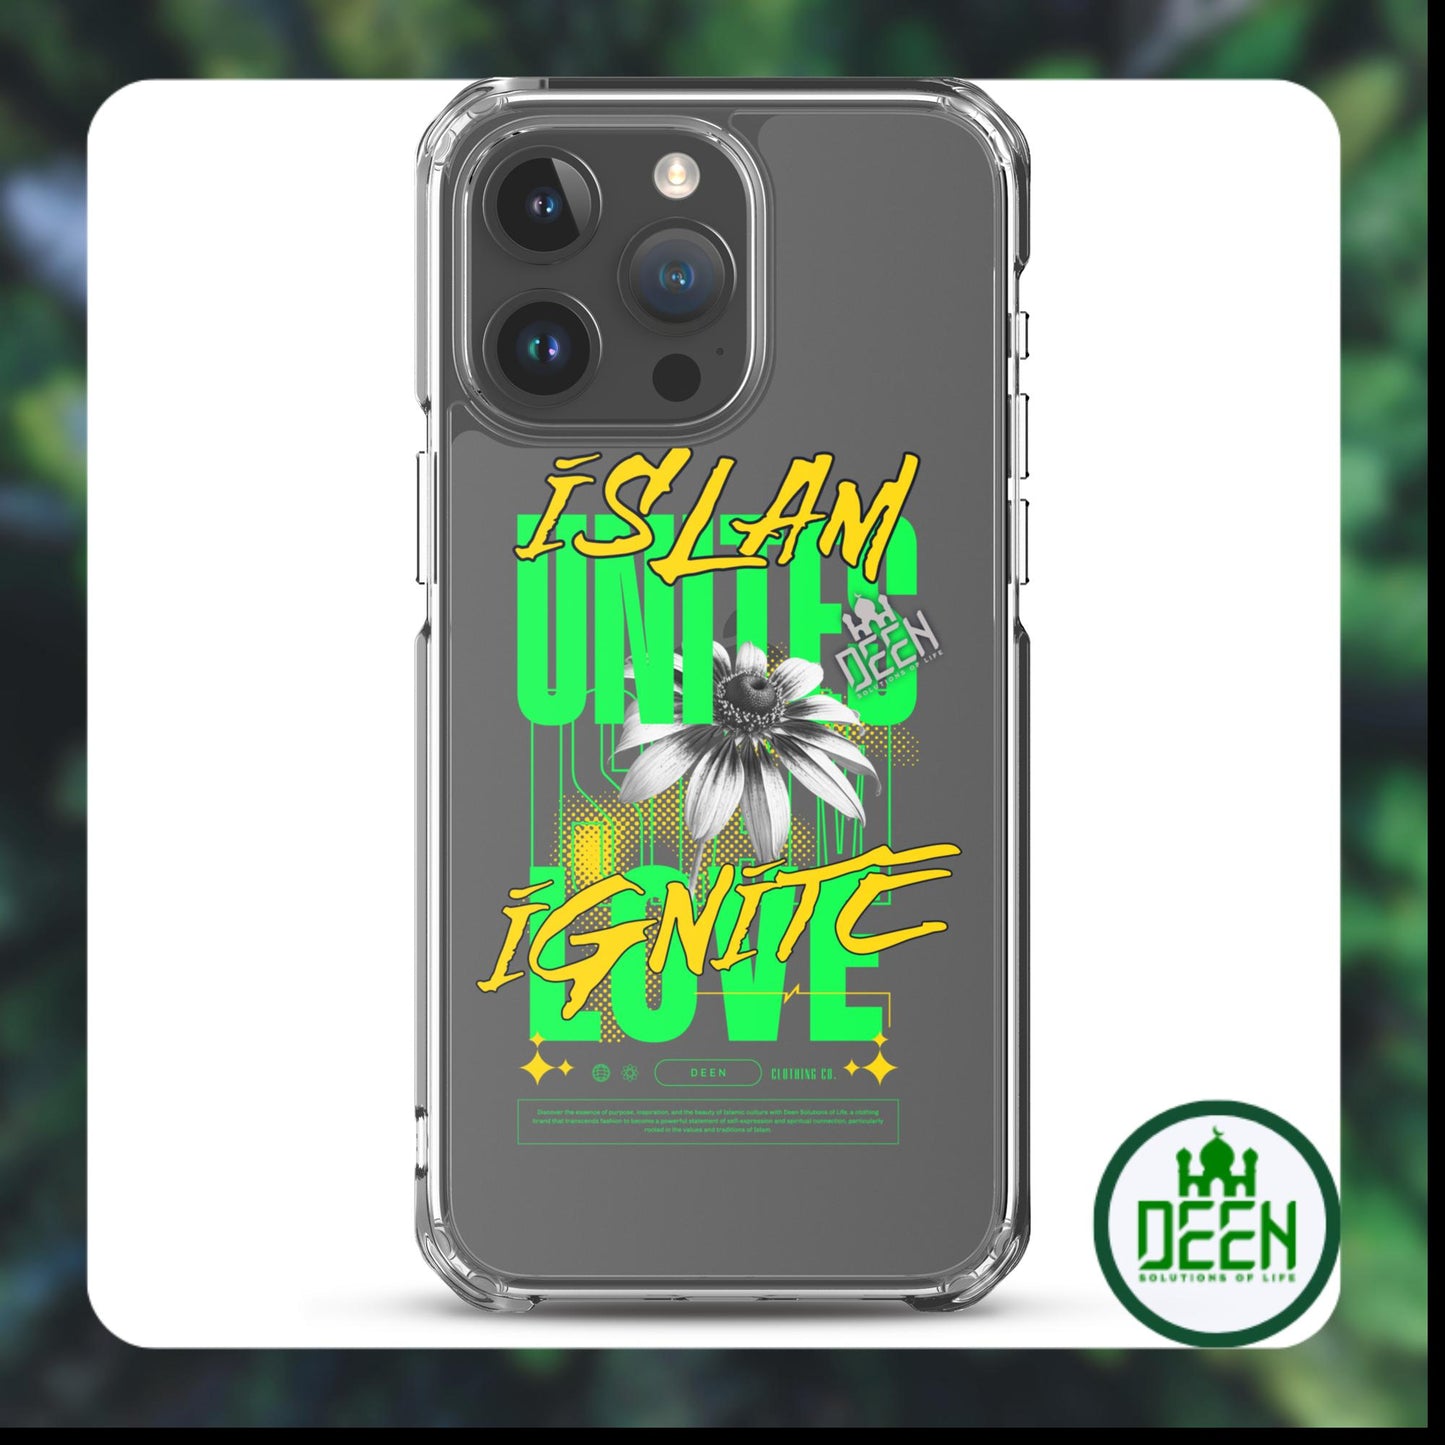 DEEN "Islam unites Love ignite" Clear Case for iPhone®